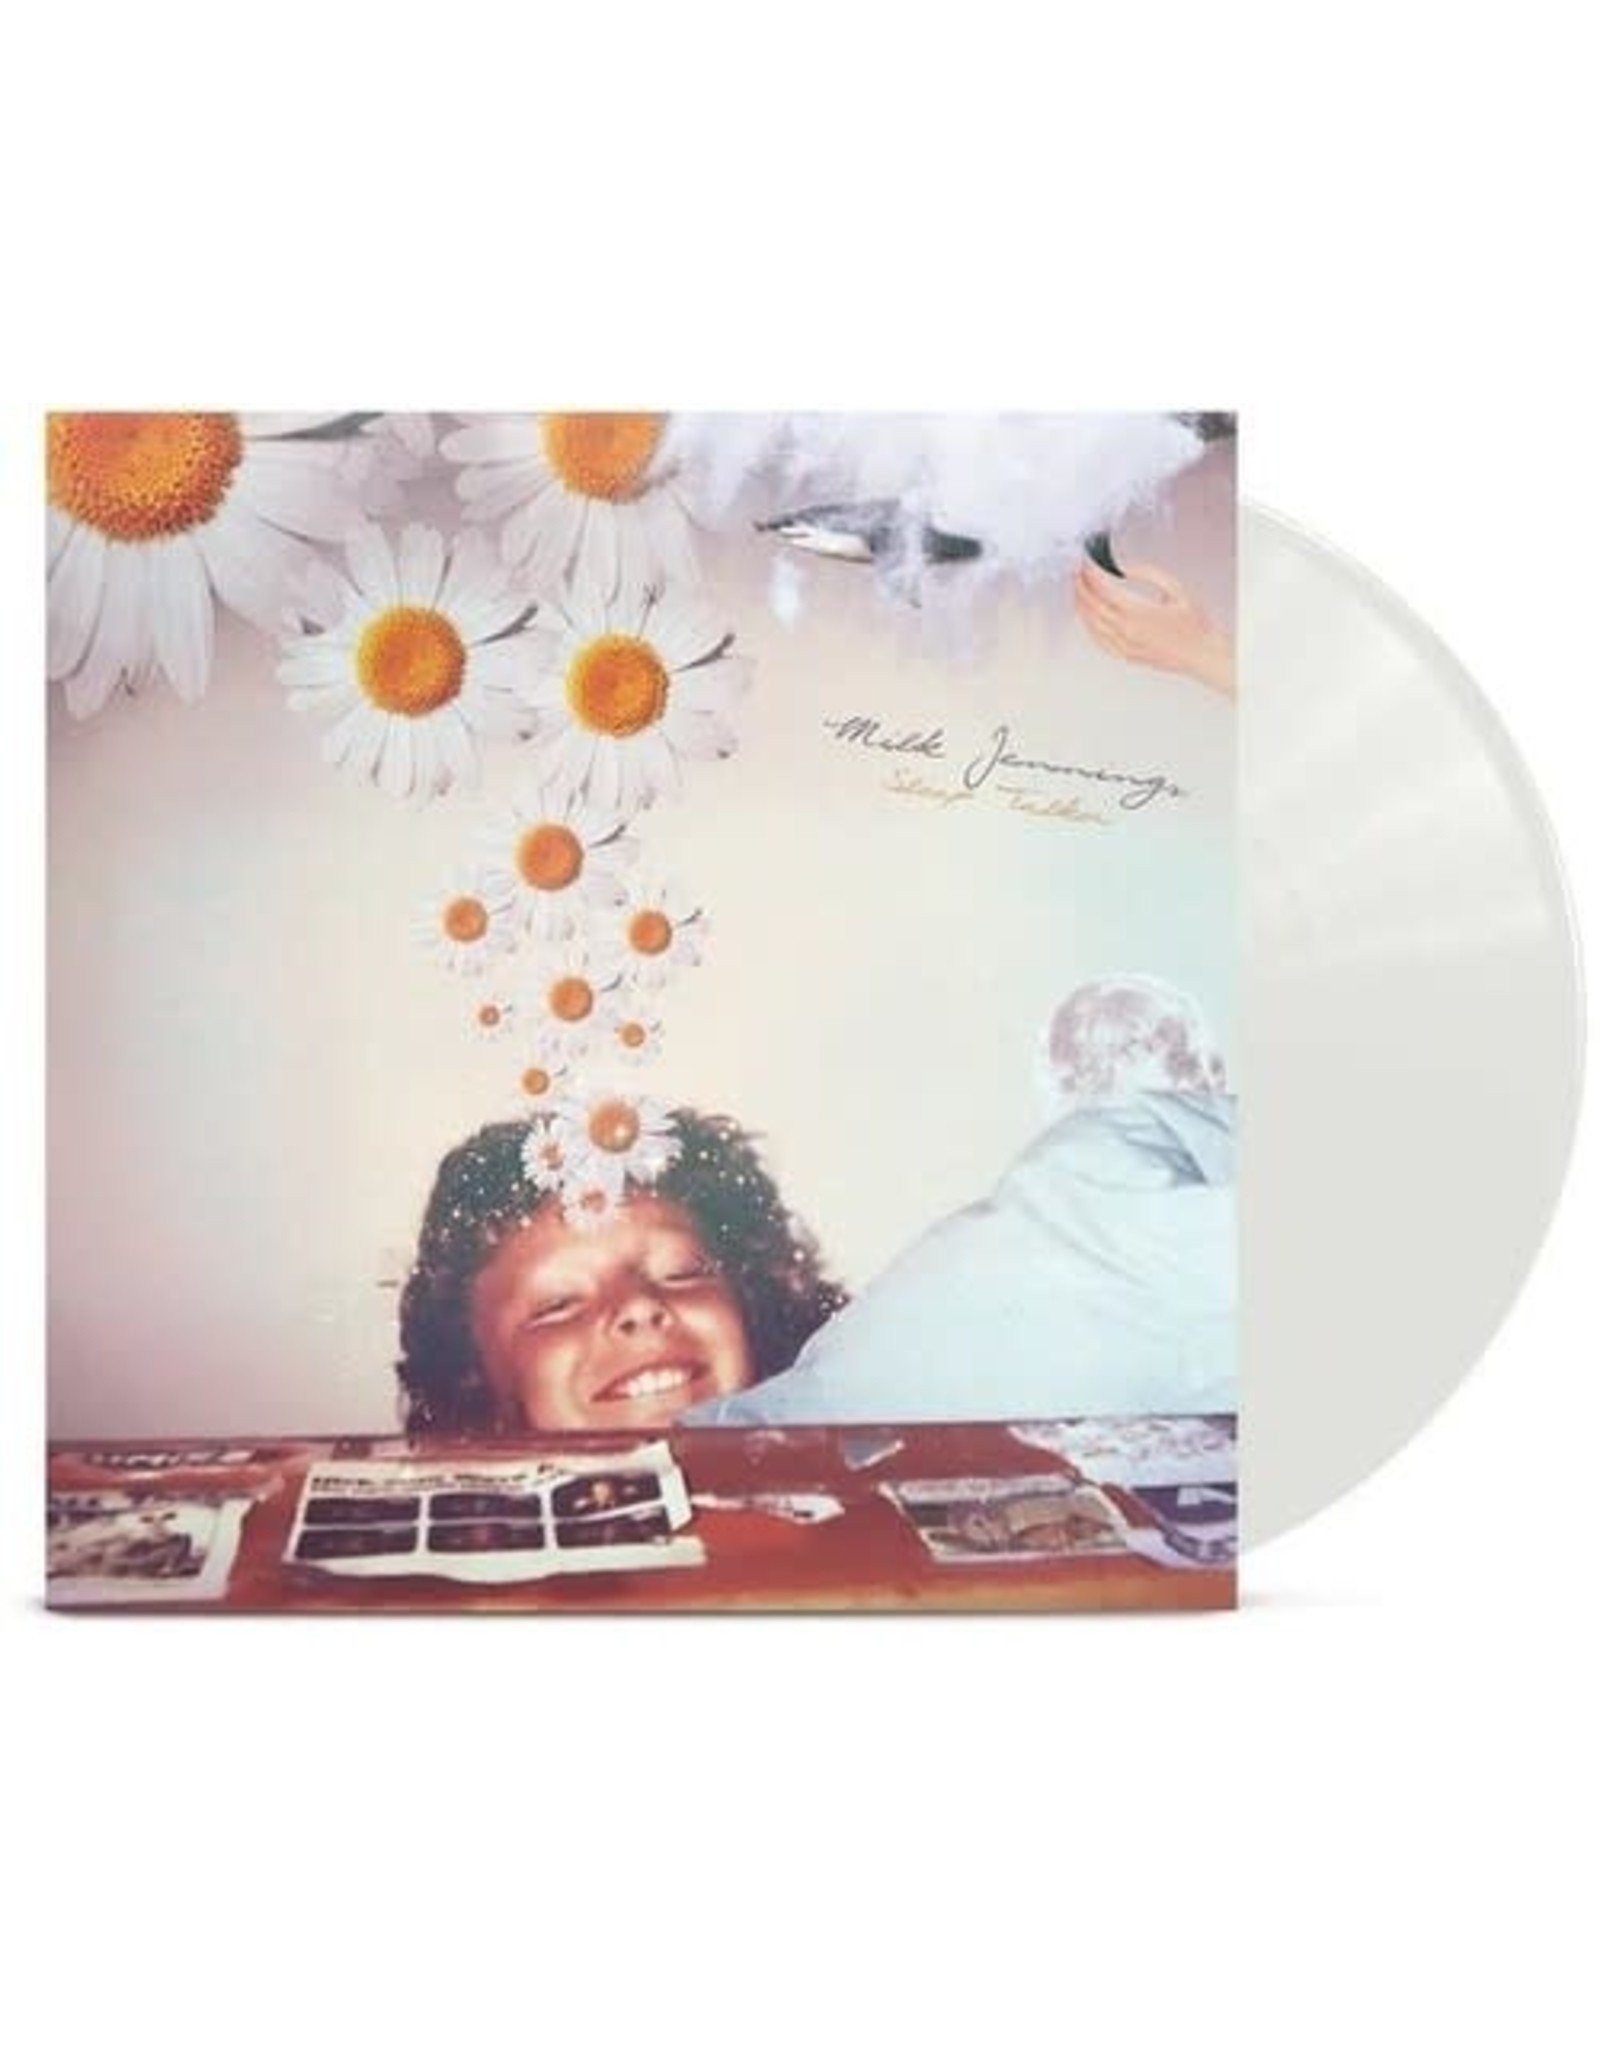 Milk Jennings / Sleep Talker (Ltd, Milky-clear vinyl)